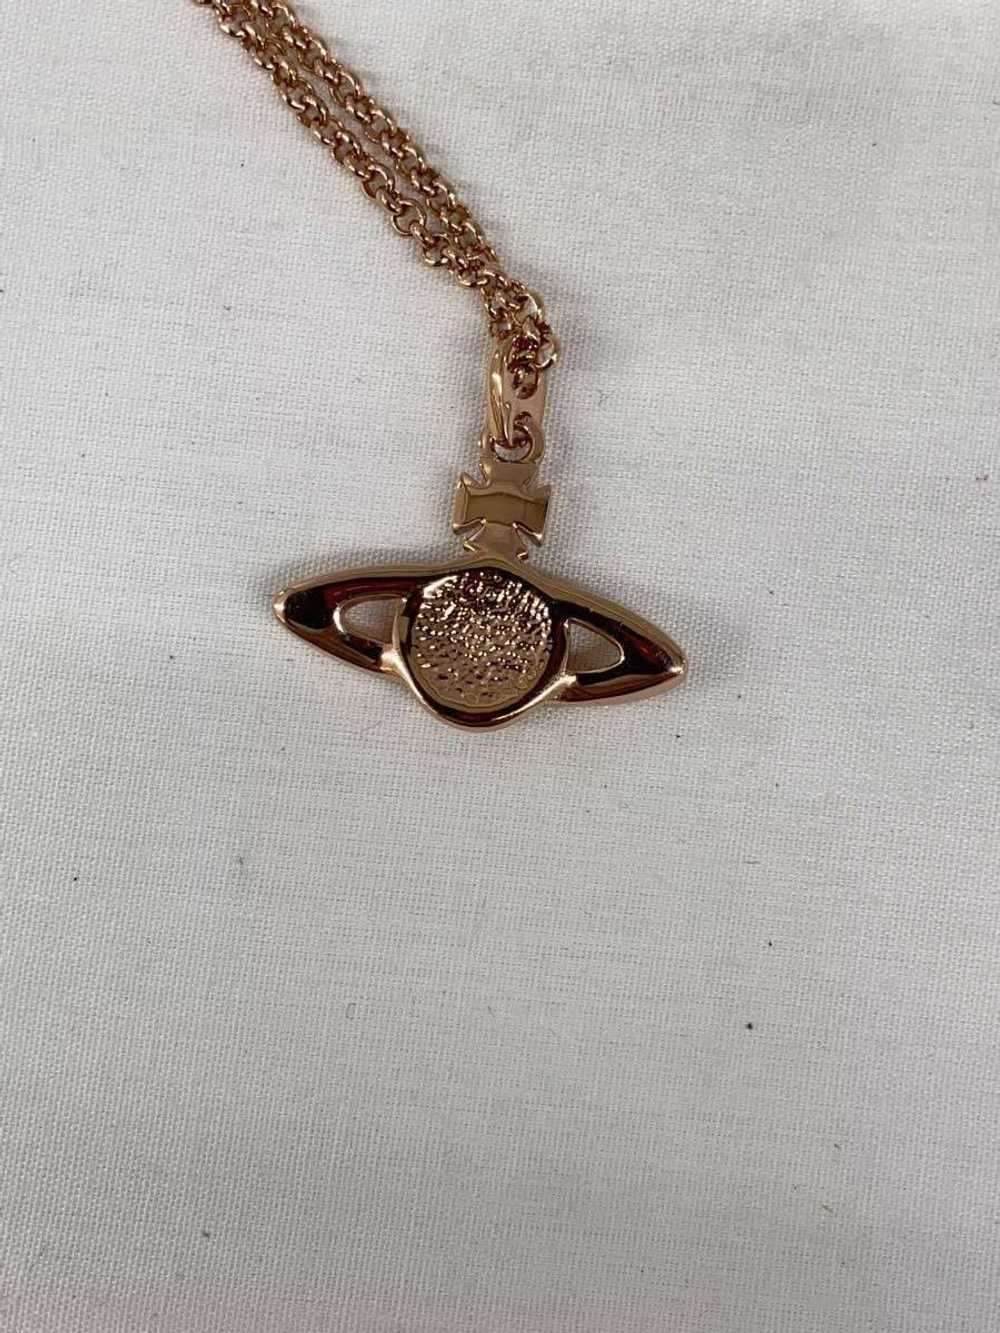 Vivienne Westwood Crystal Orb Necklace - image 4